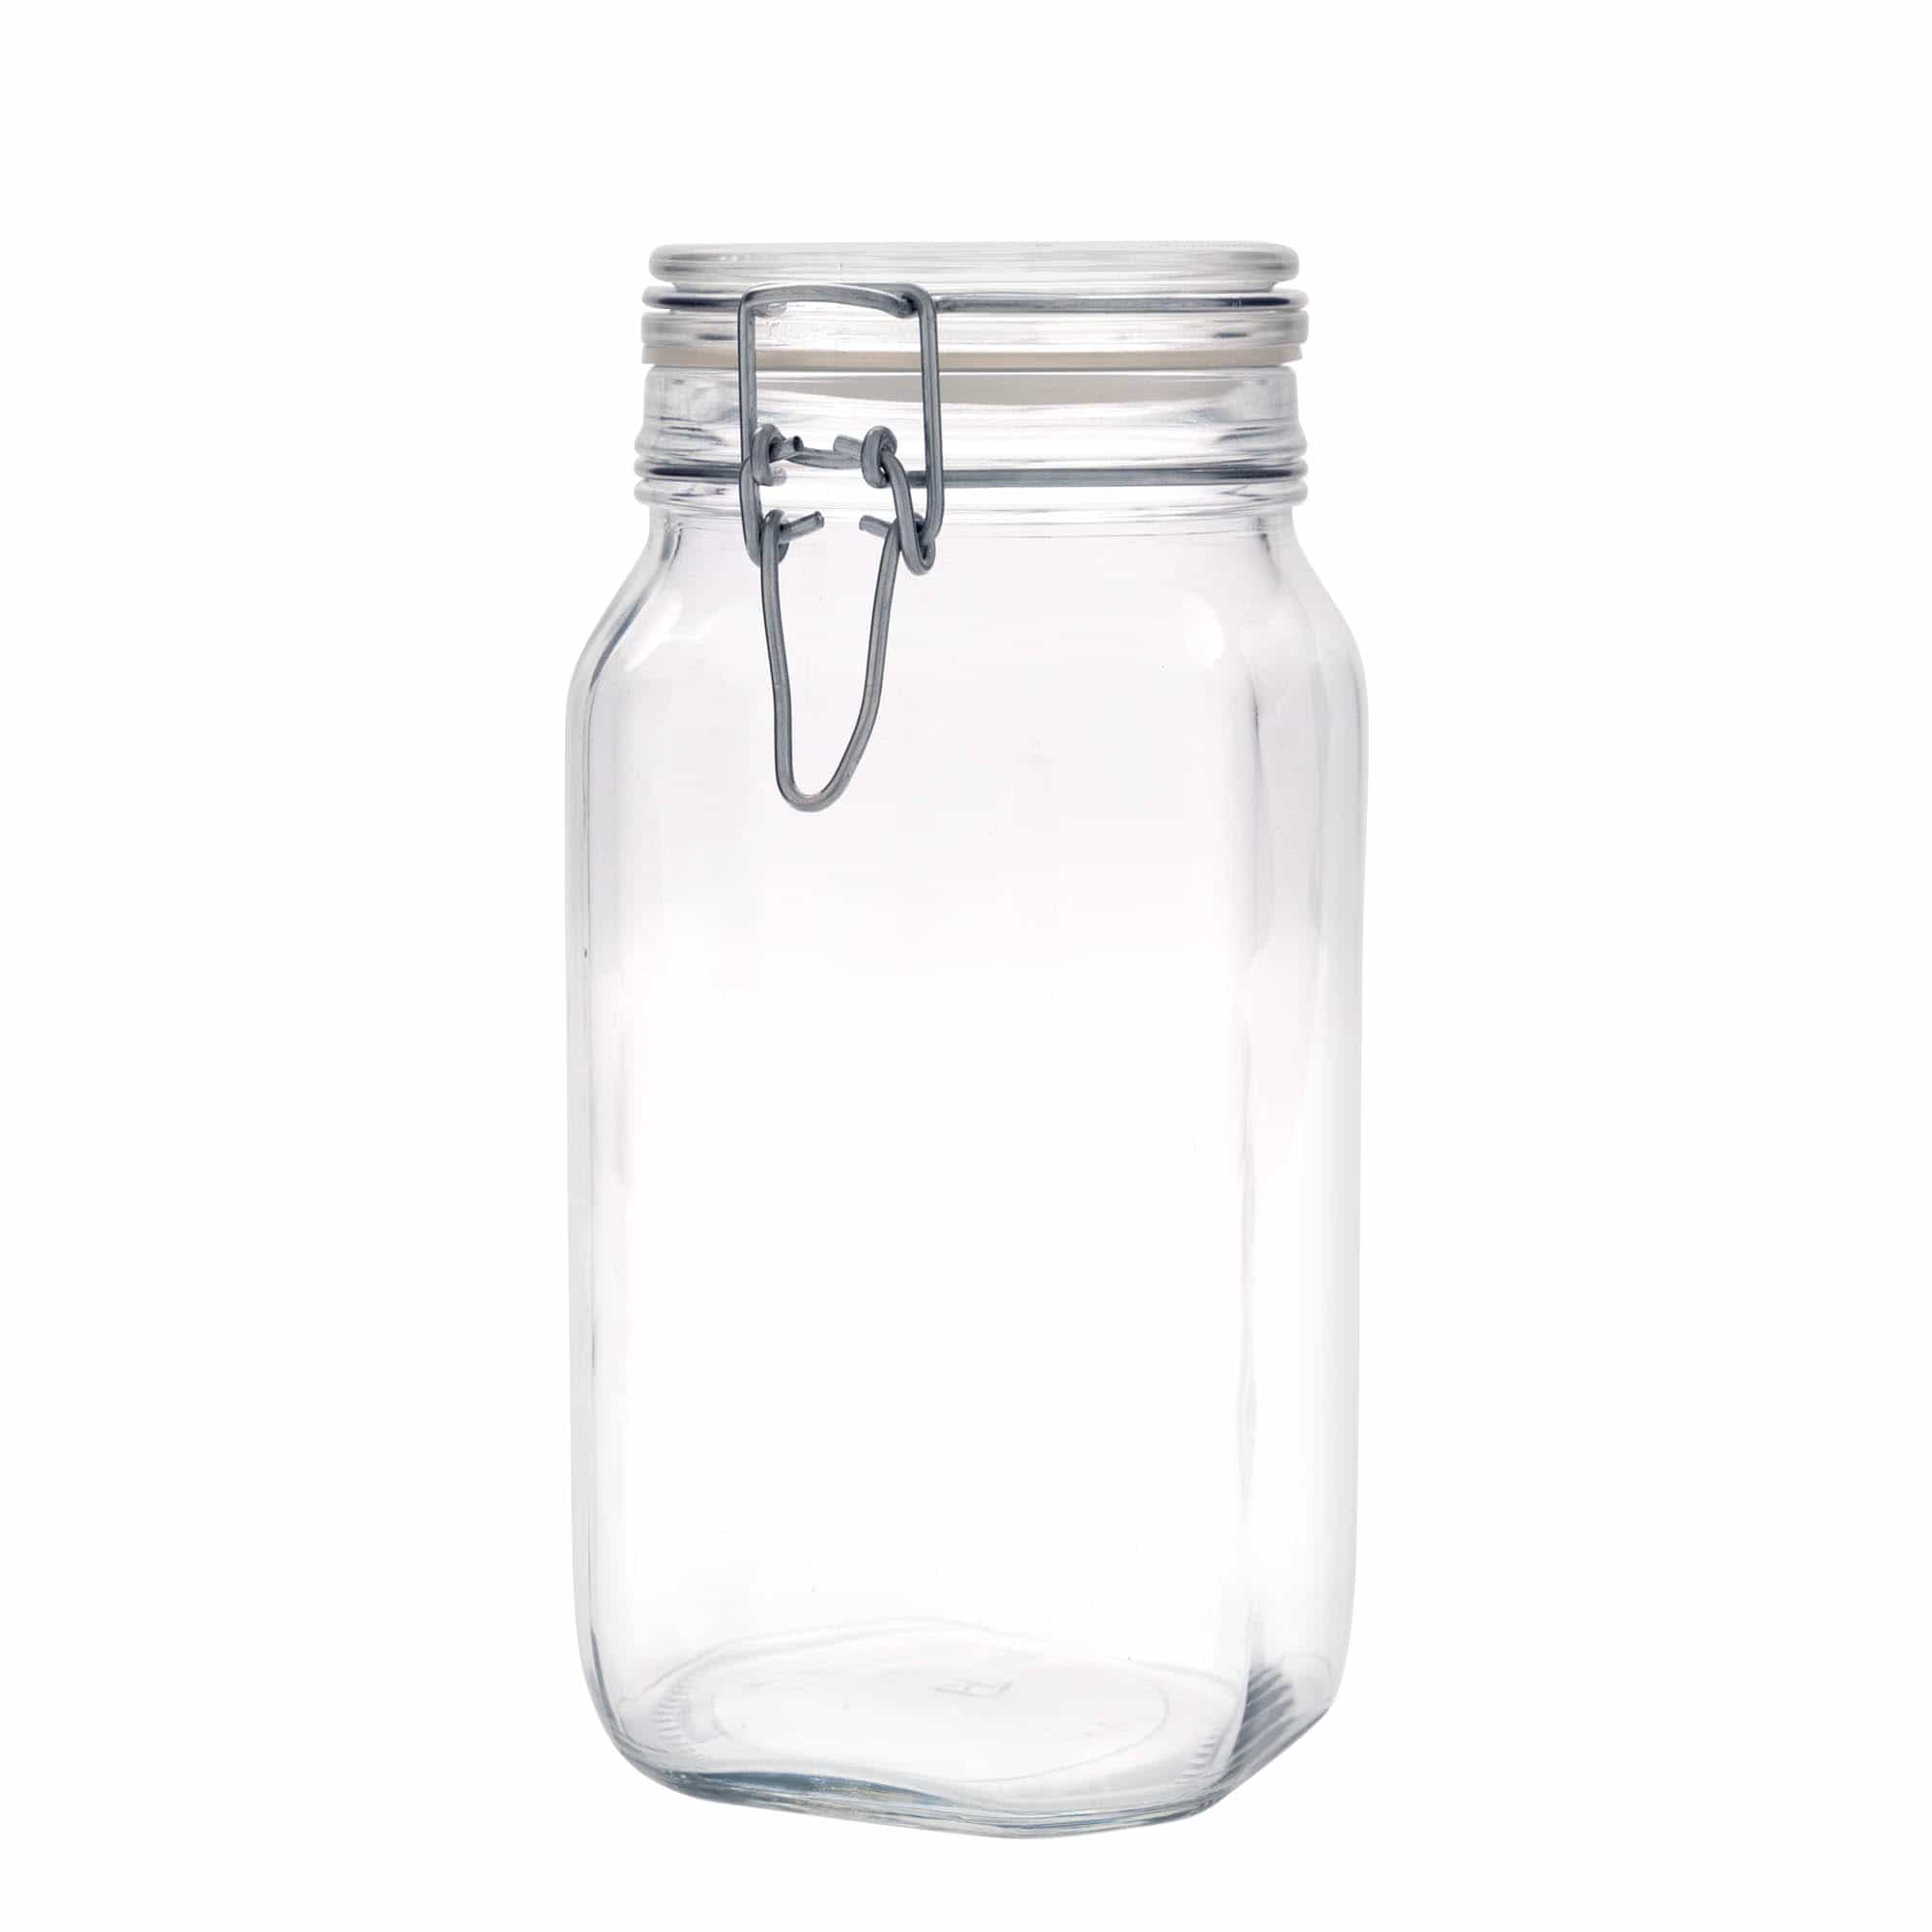 1,500 ml clip top jar 'Fido', square, closure: clip top